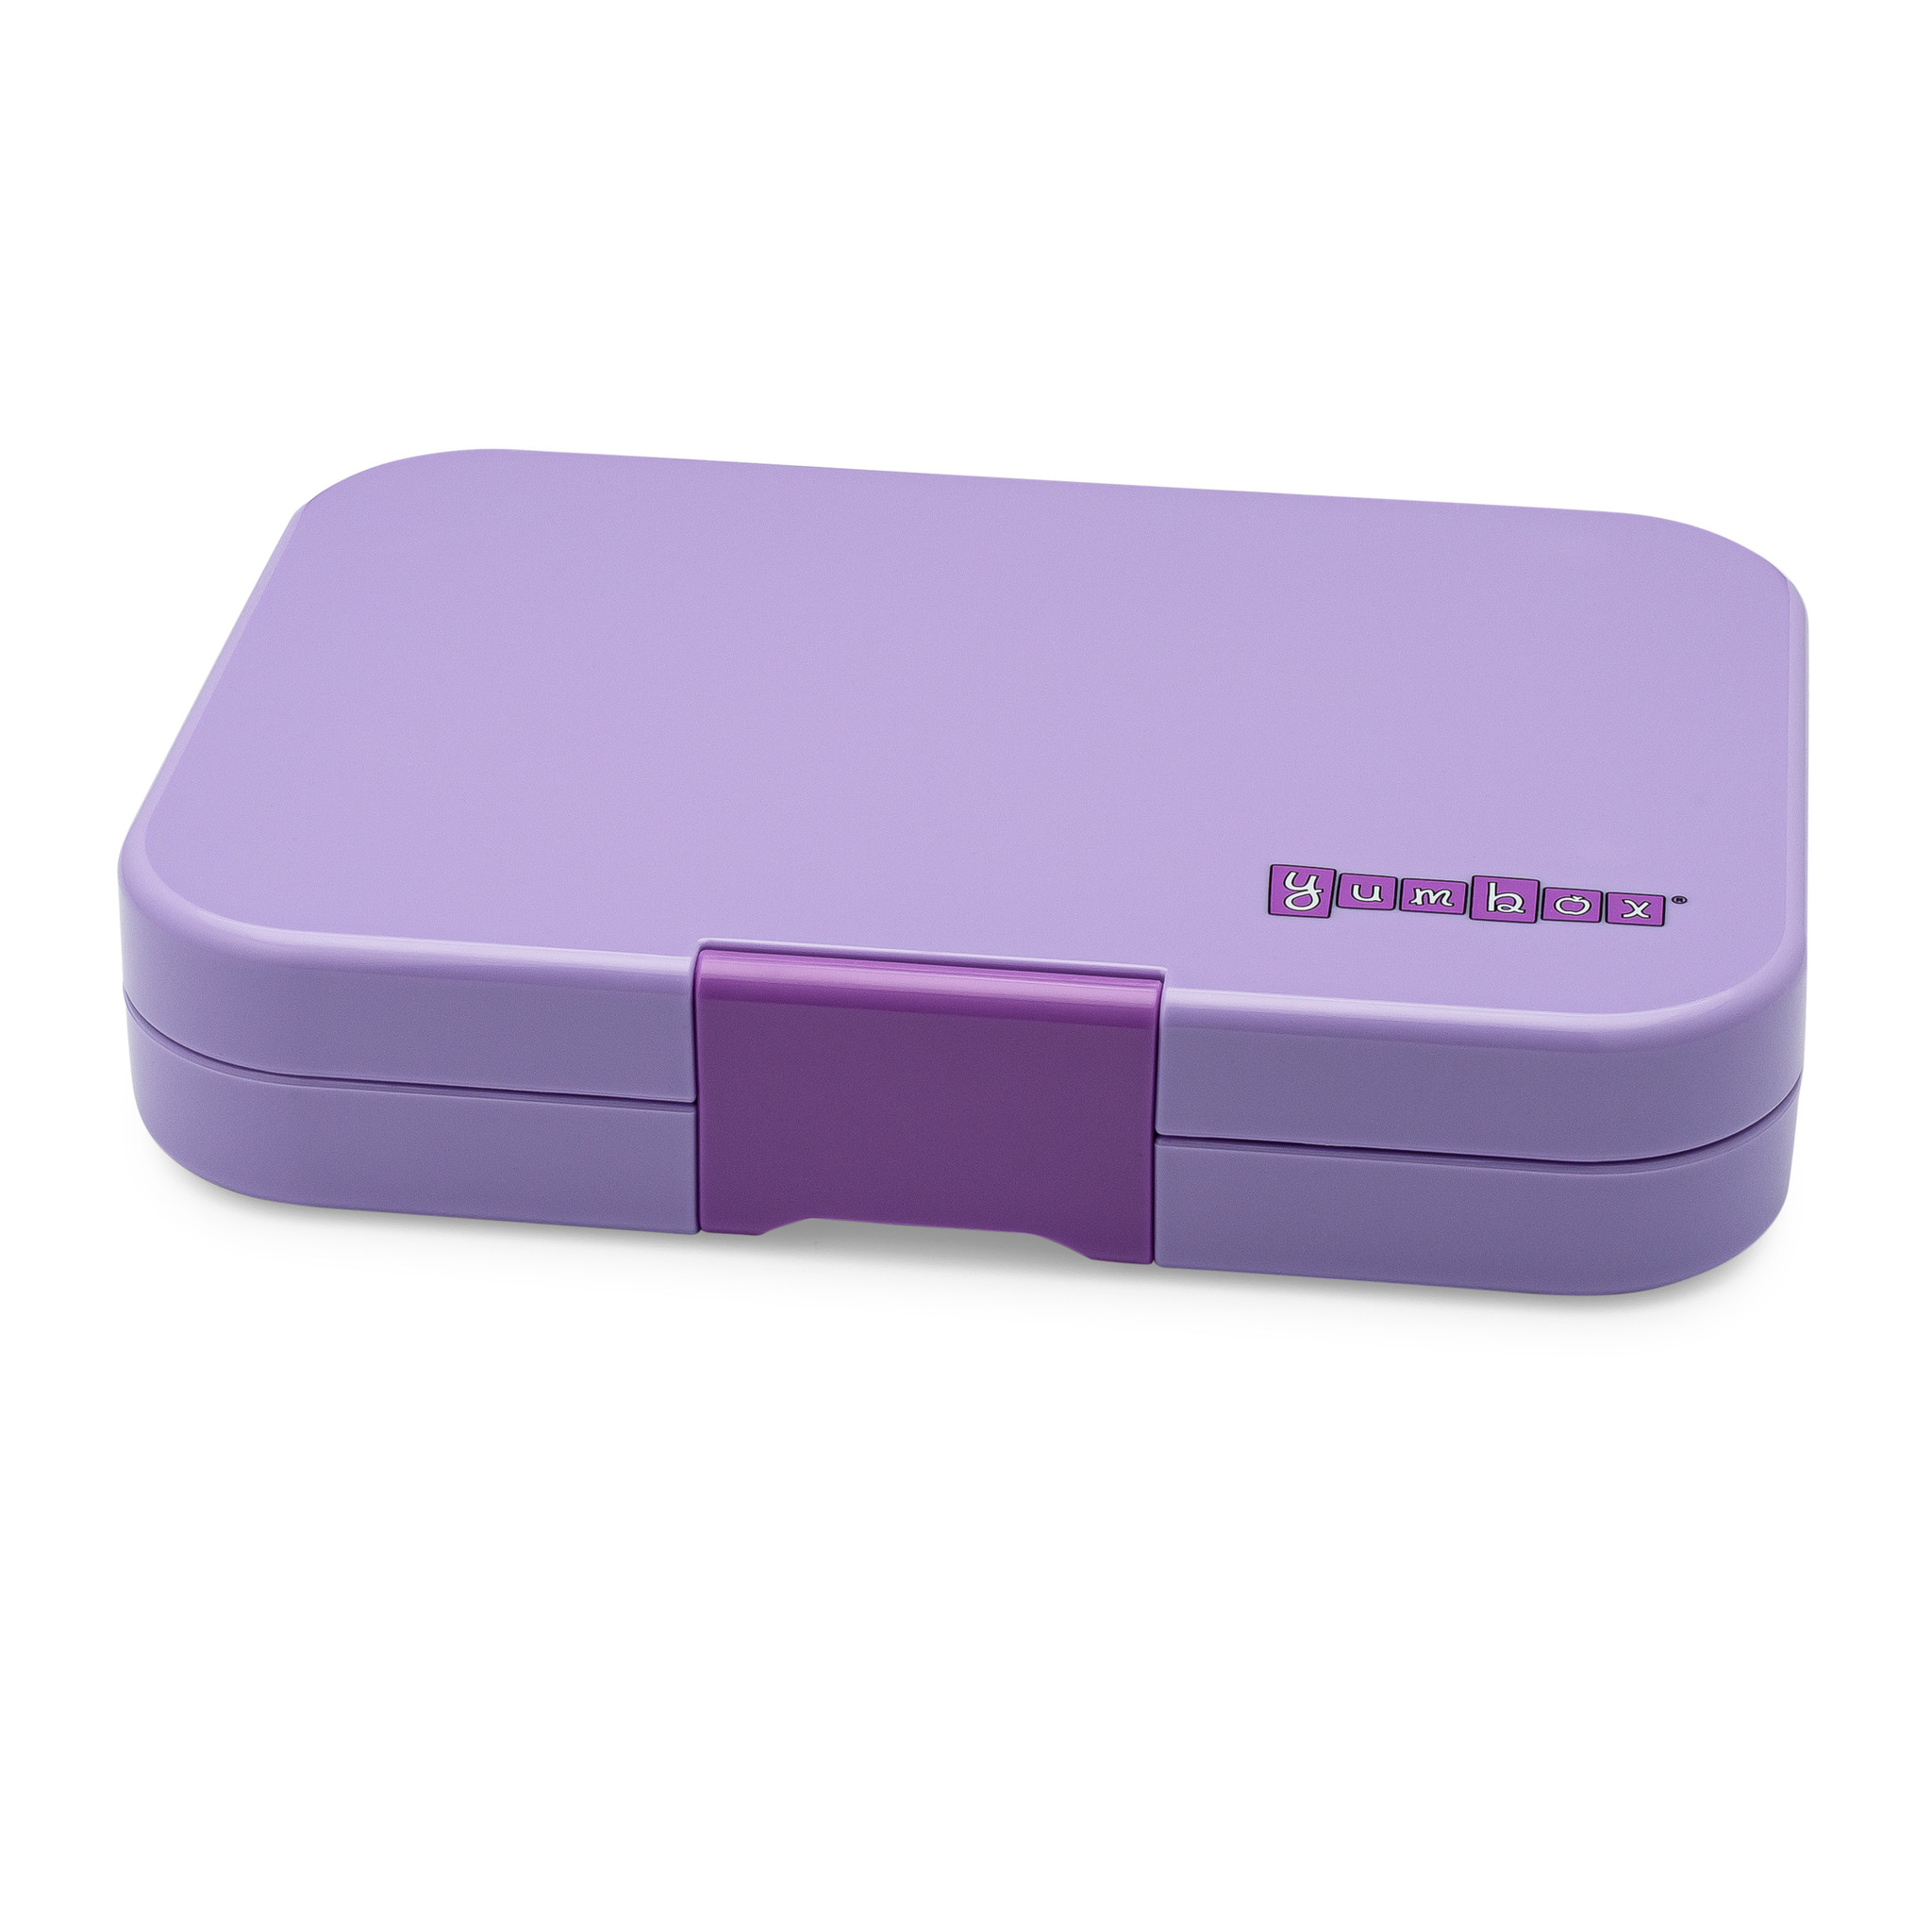 Yumbox Tapas XL lunchbox Ibiza Purple / Groovy tray 4-sections-2